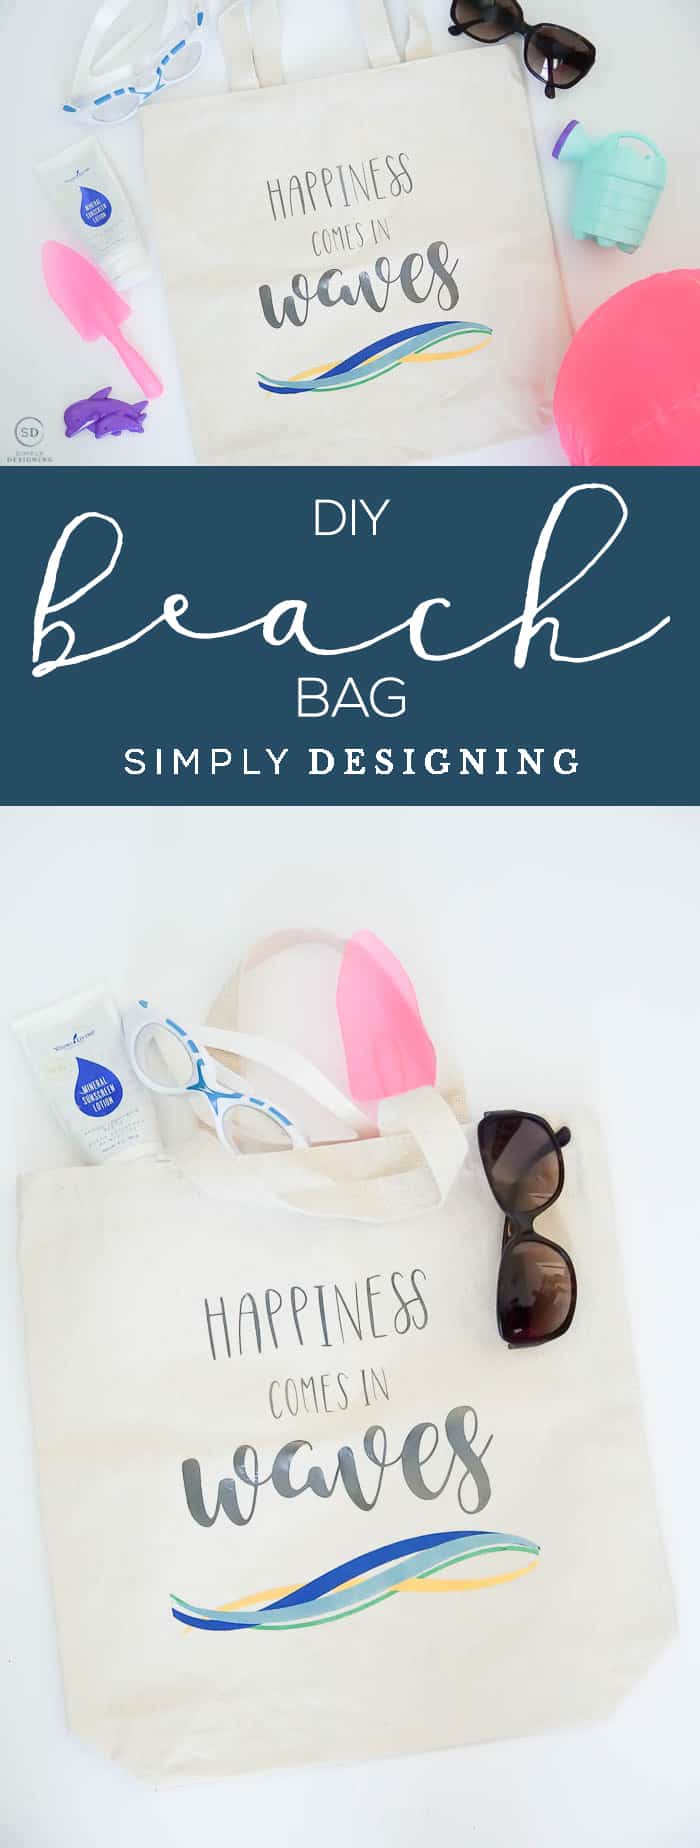 DIY Beach Bag - How to make a Tote Bag with Vinyl - Vinyl Beach Bag